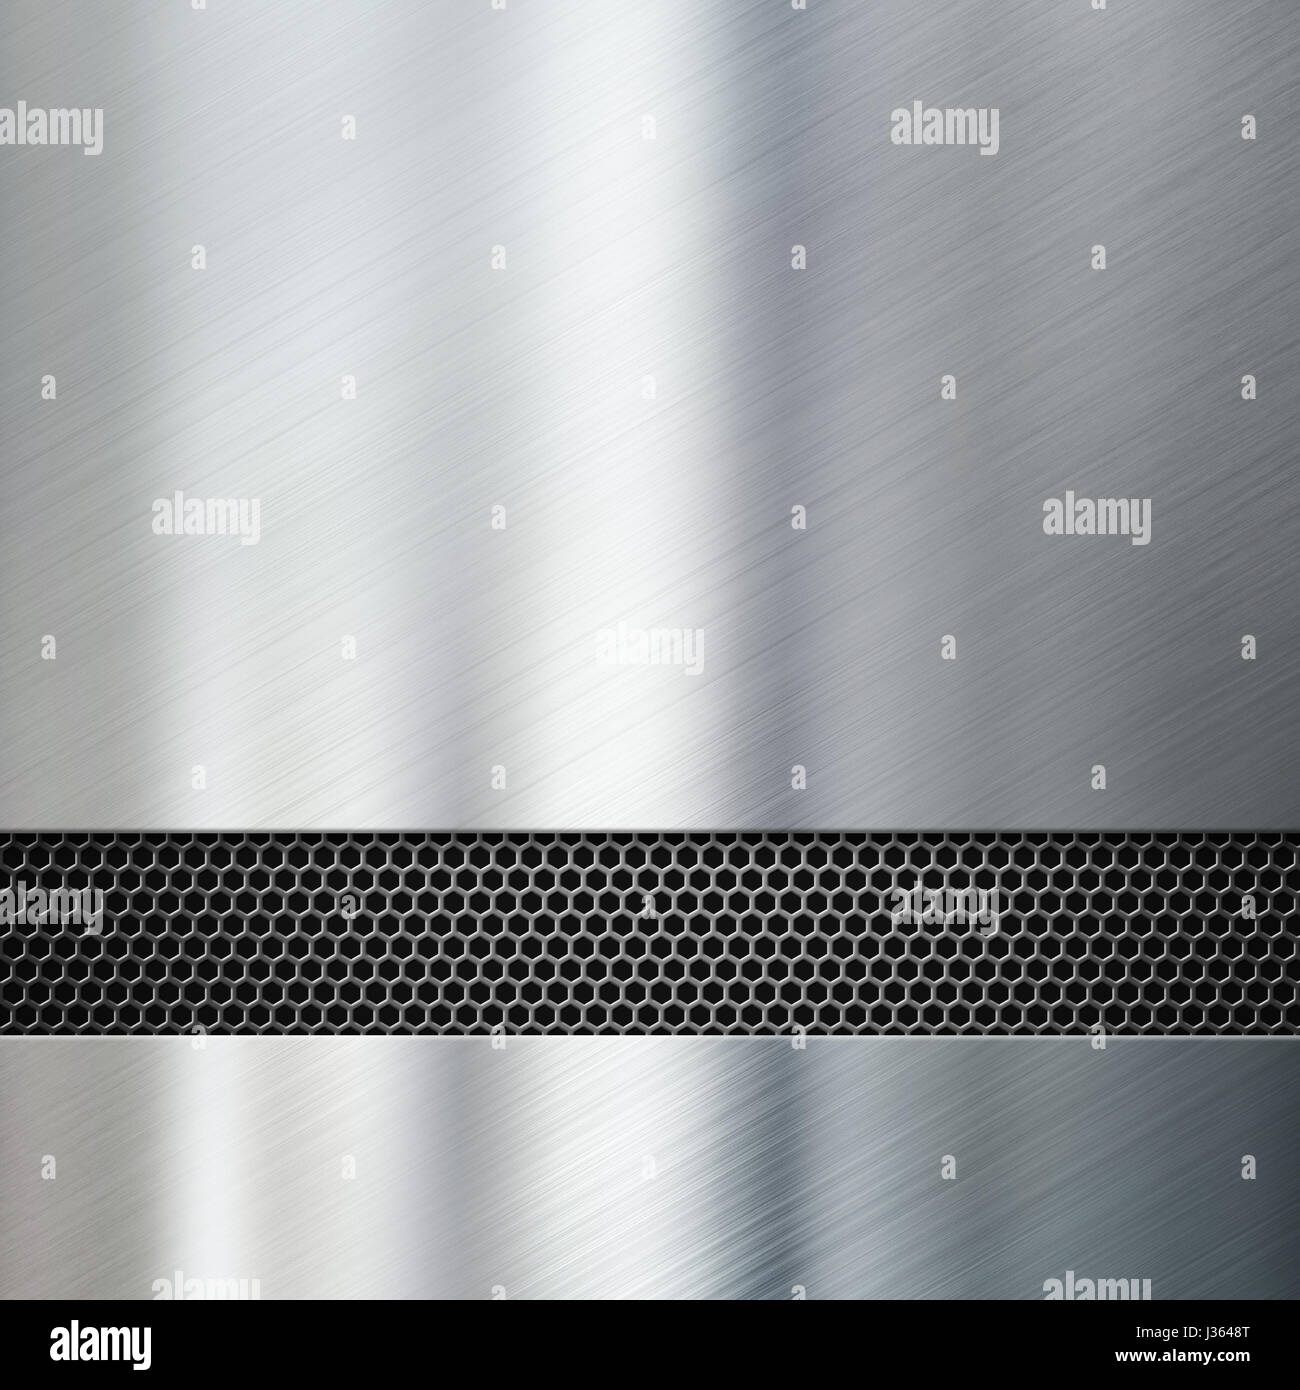 metal panels with hexadecimal grid 3d illustration Stock Photo